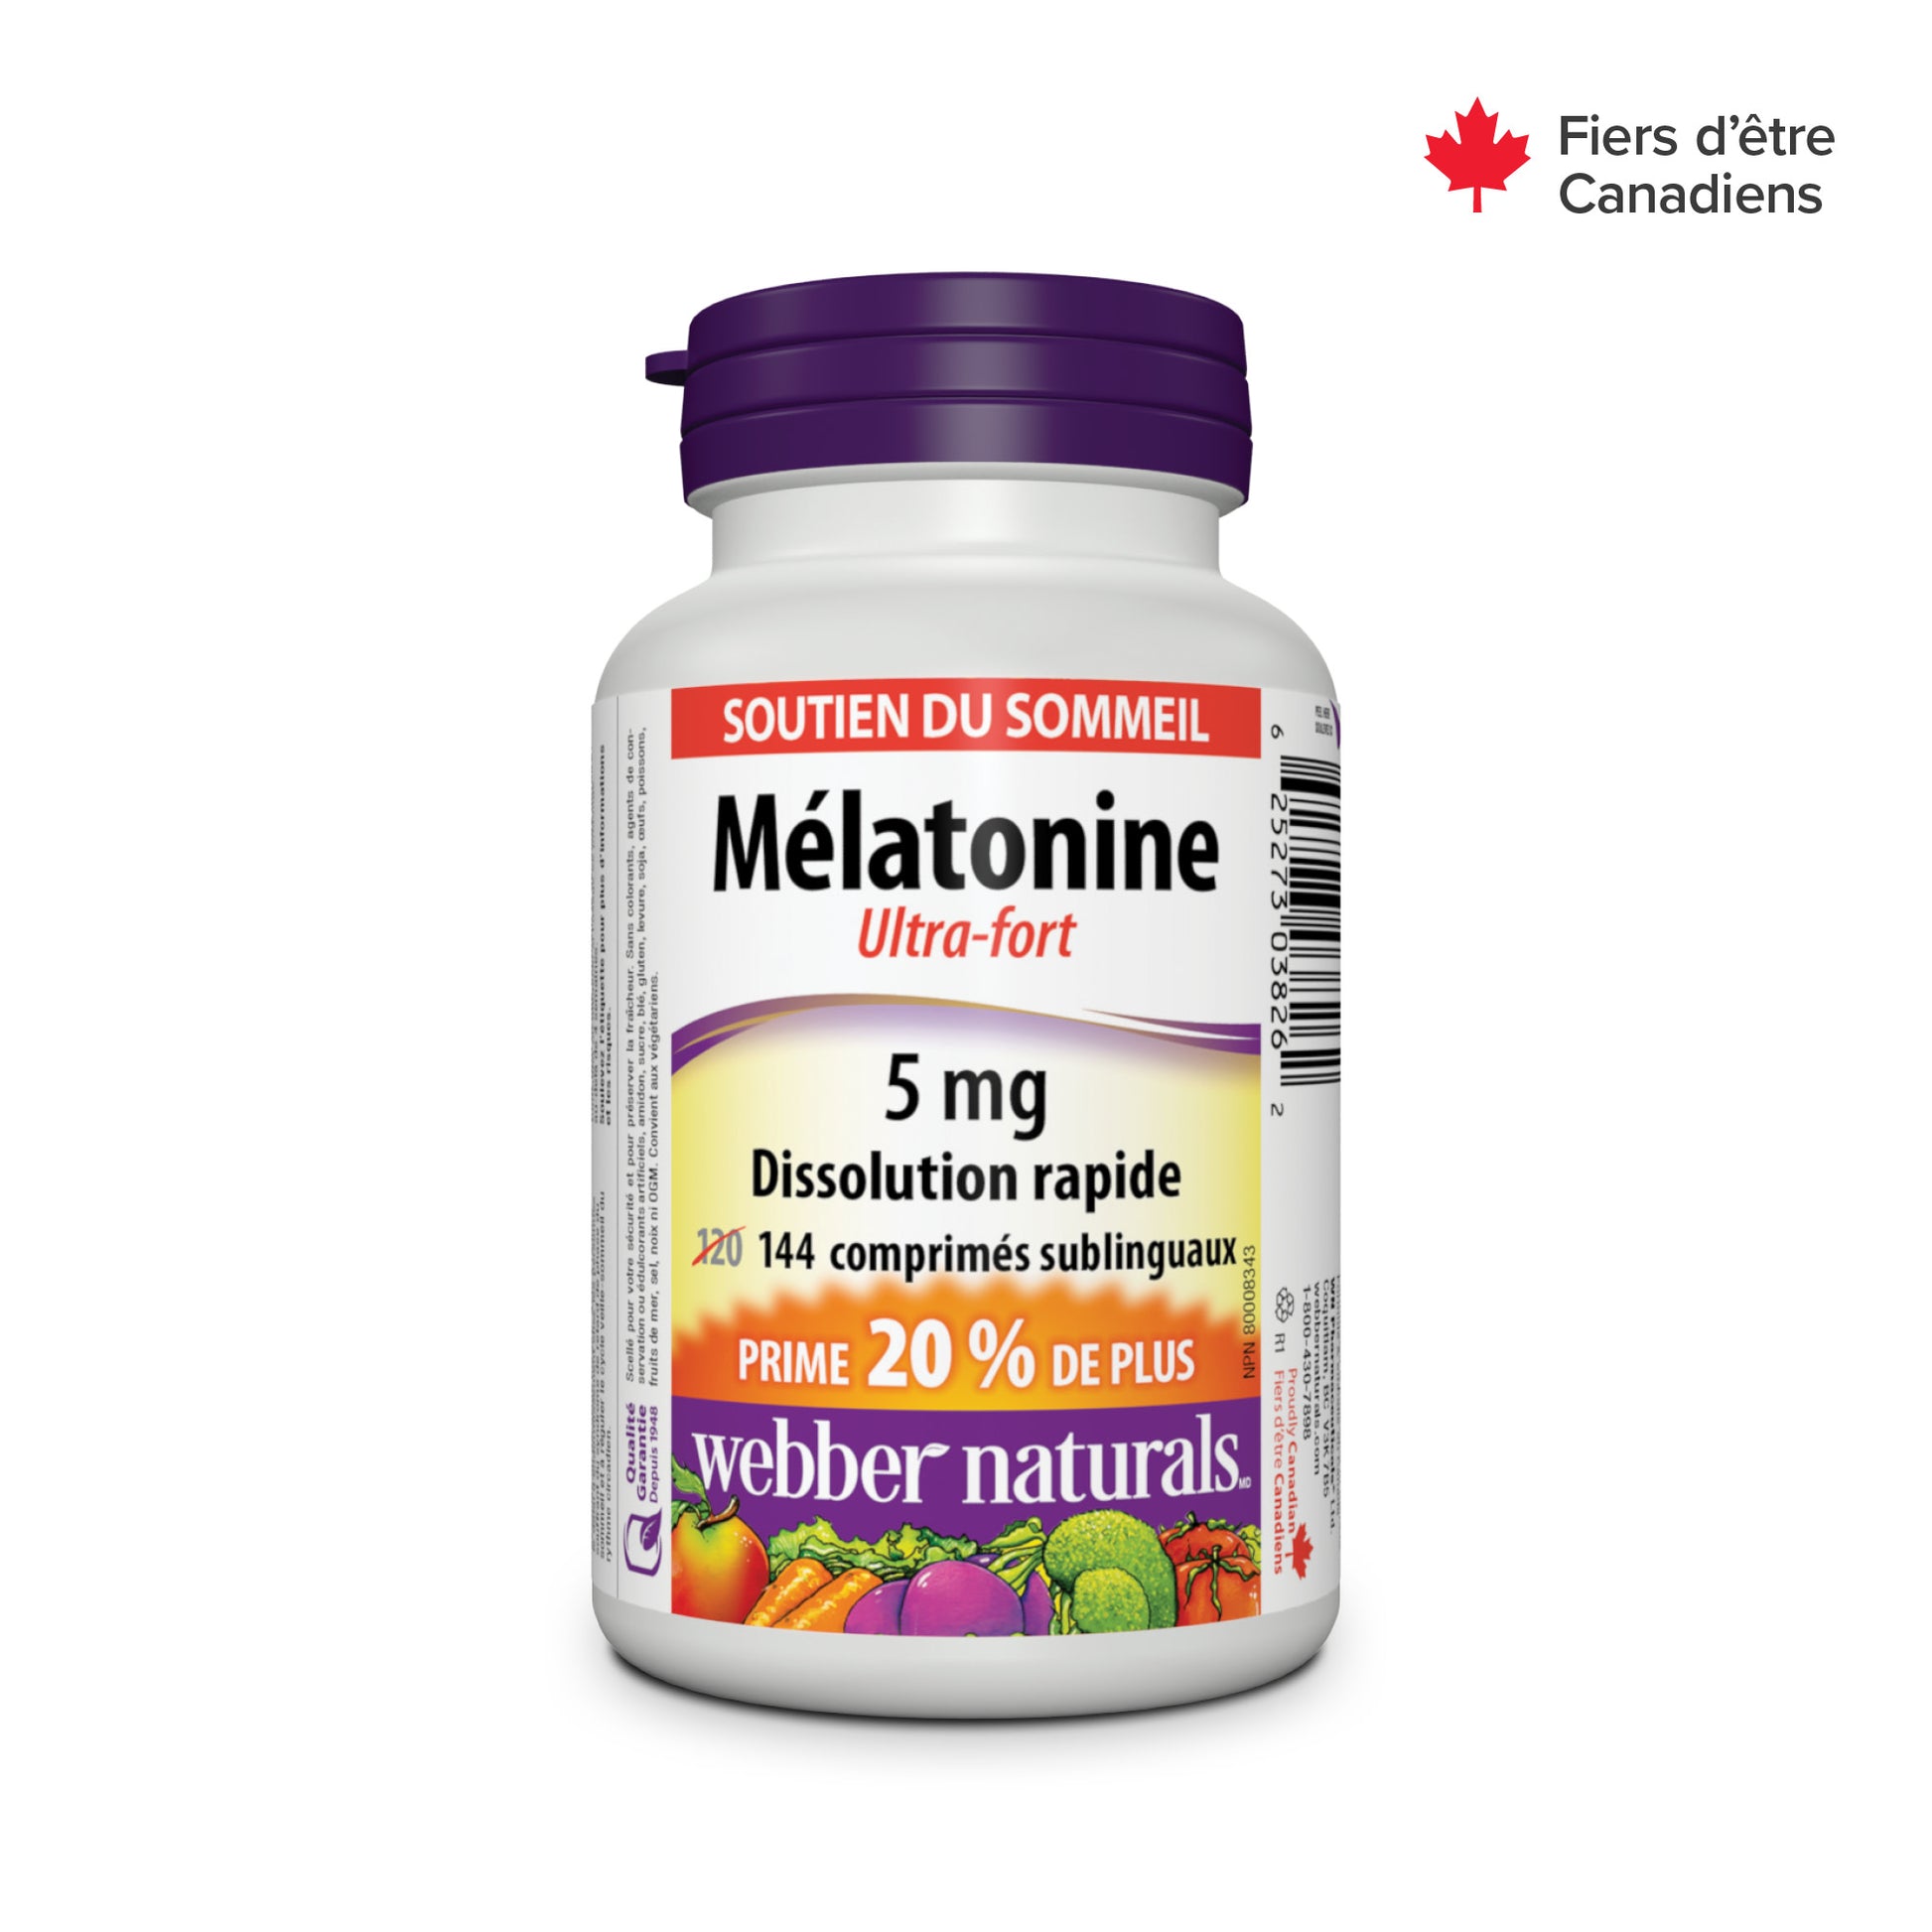 Melatonin Extra Strength Quick Dissolve 5 mg for Webber Naturals|v|hi-res|WN3826